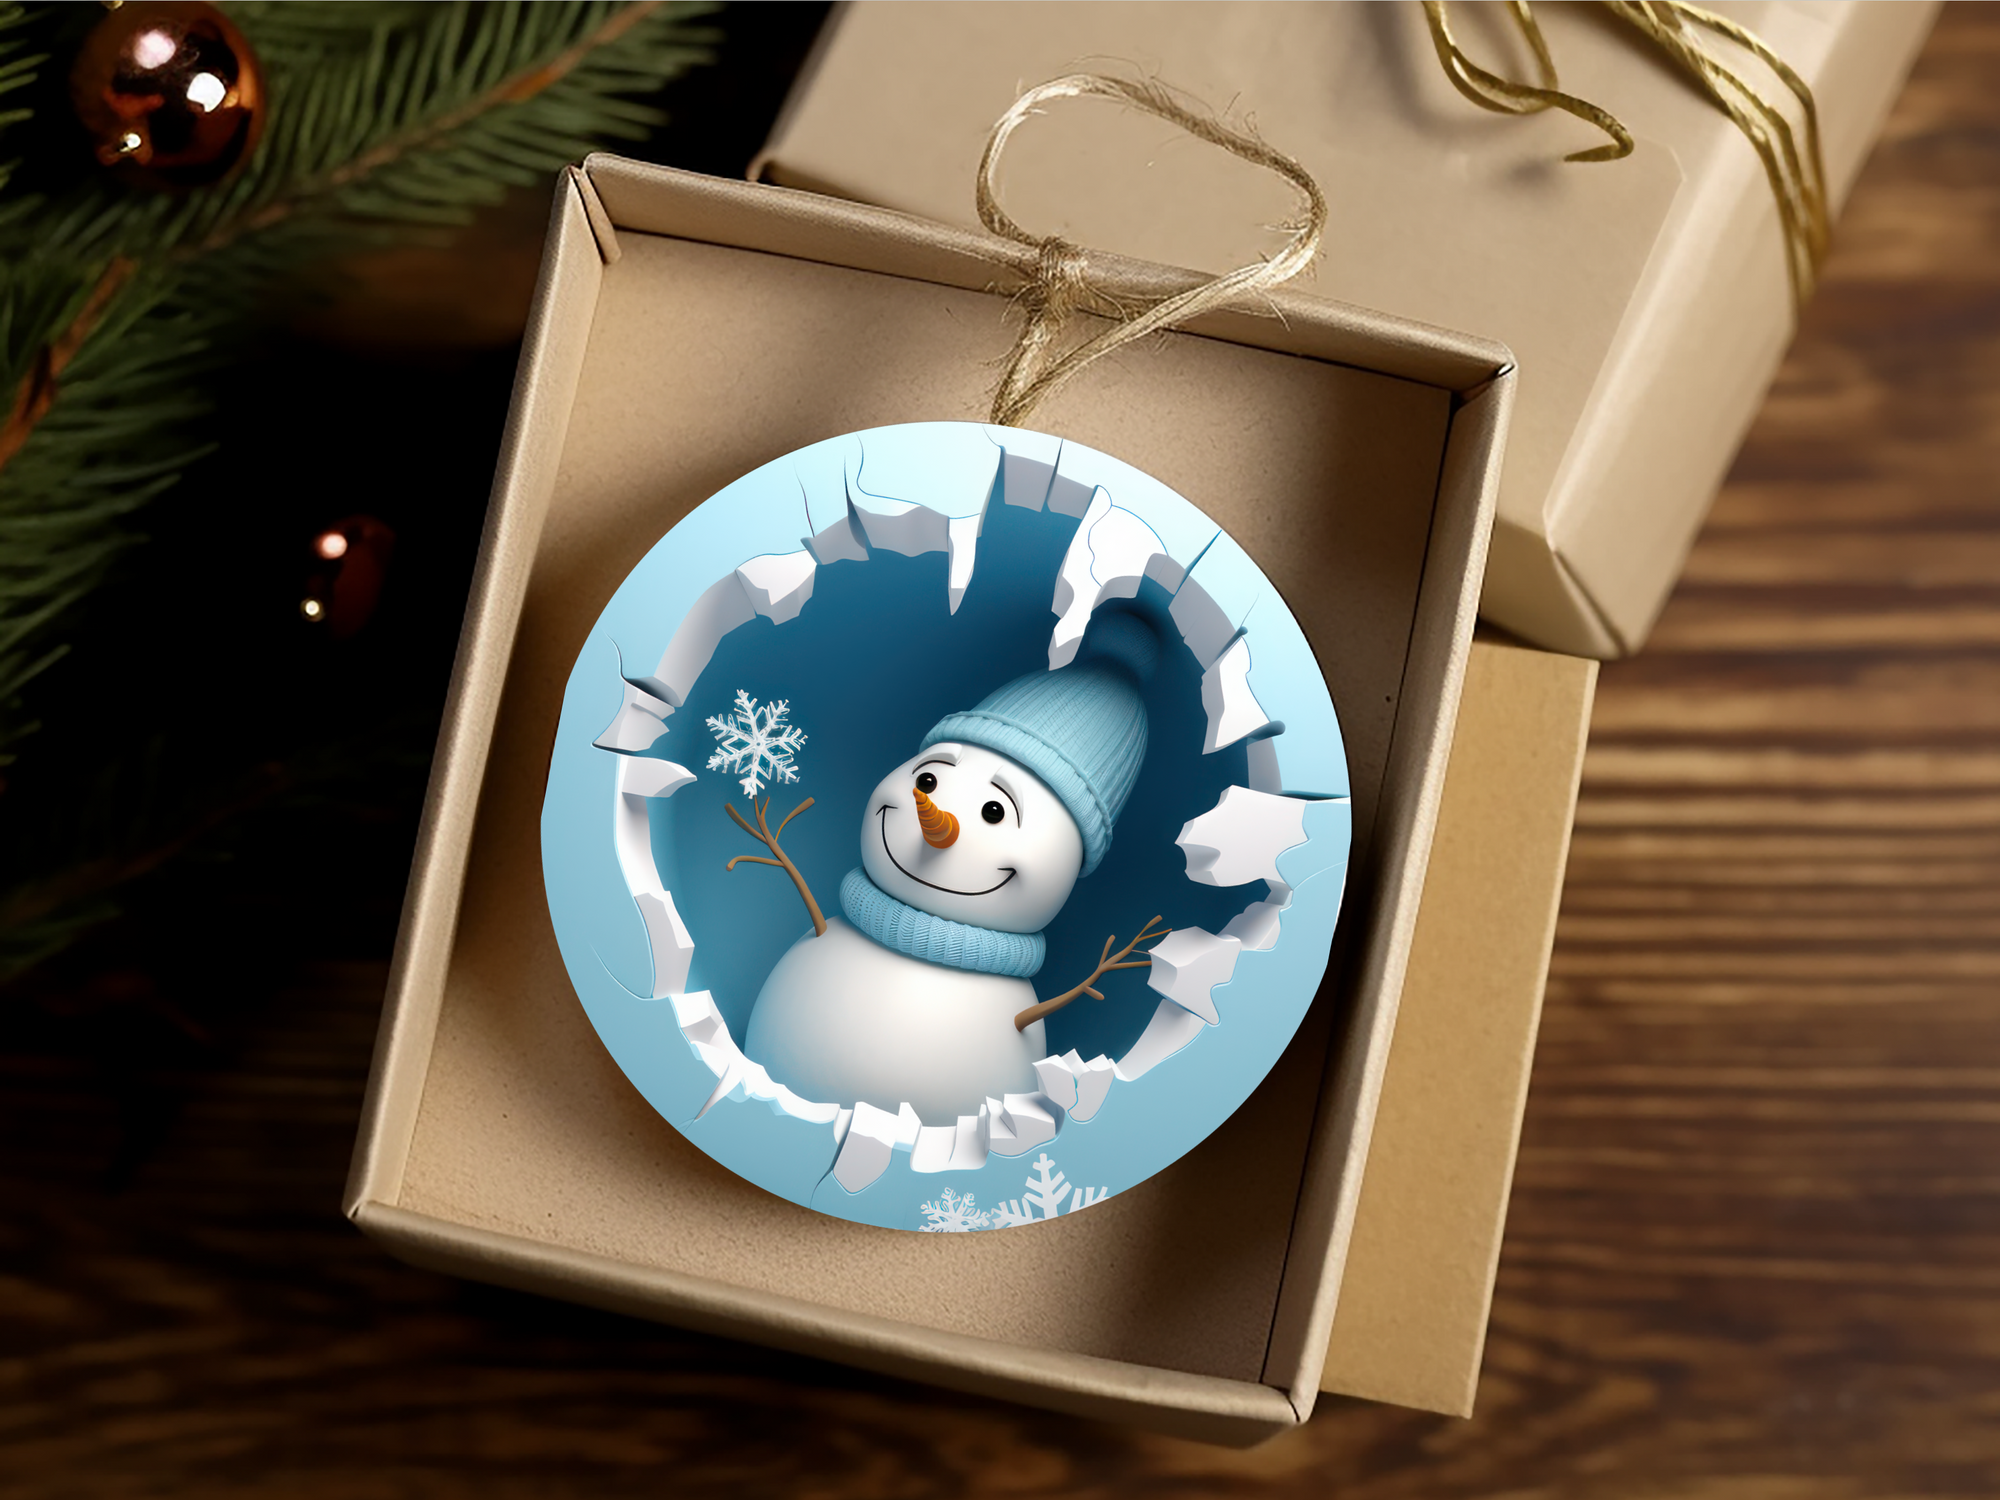 3" Ceramic Ornament 3D Snowman #409